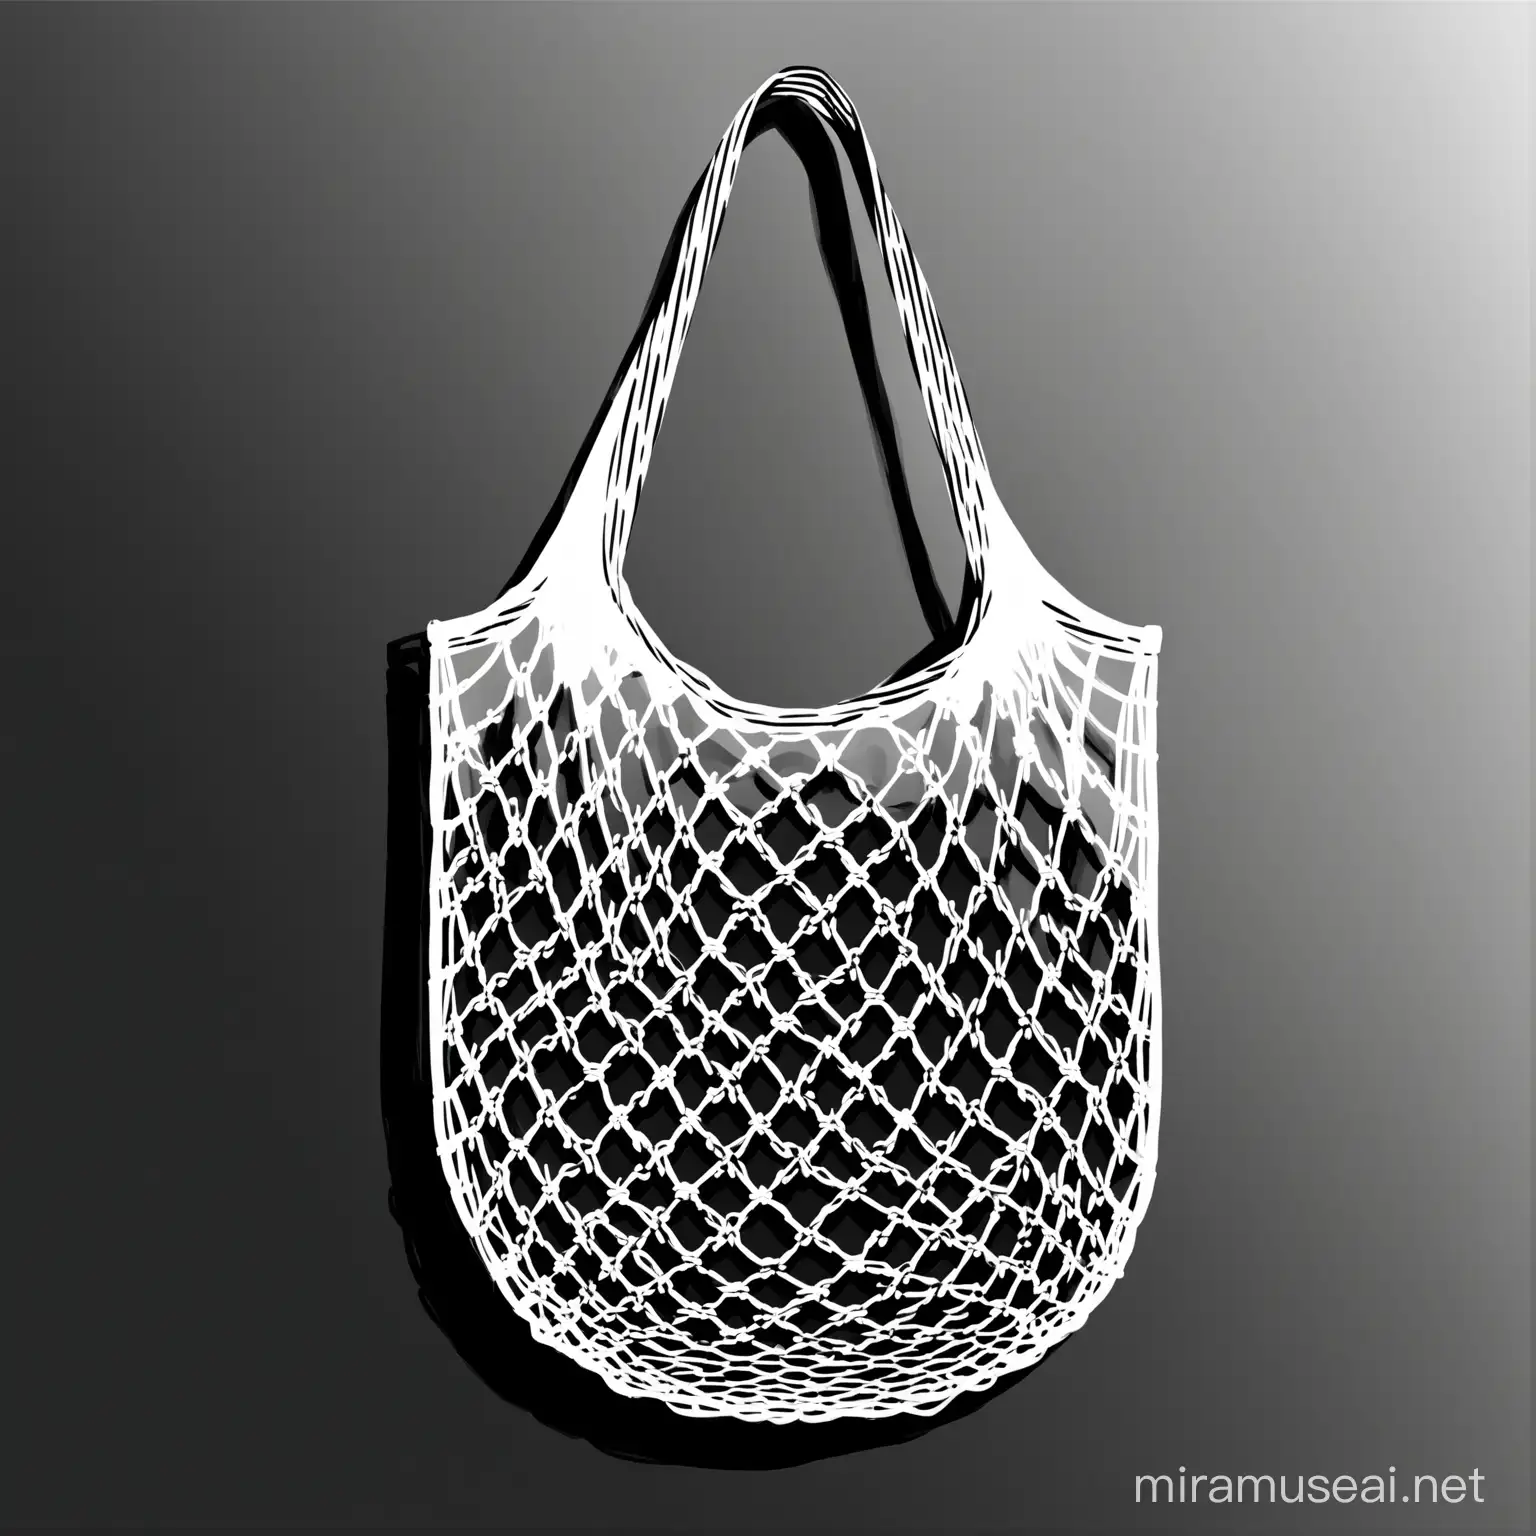 shopping net bag empty black white 